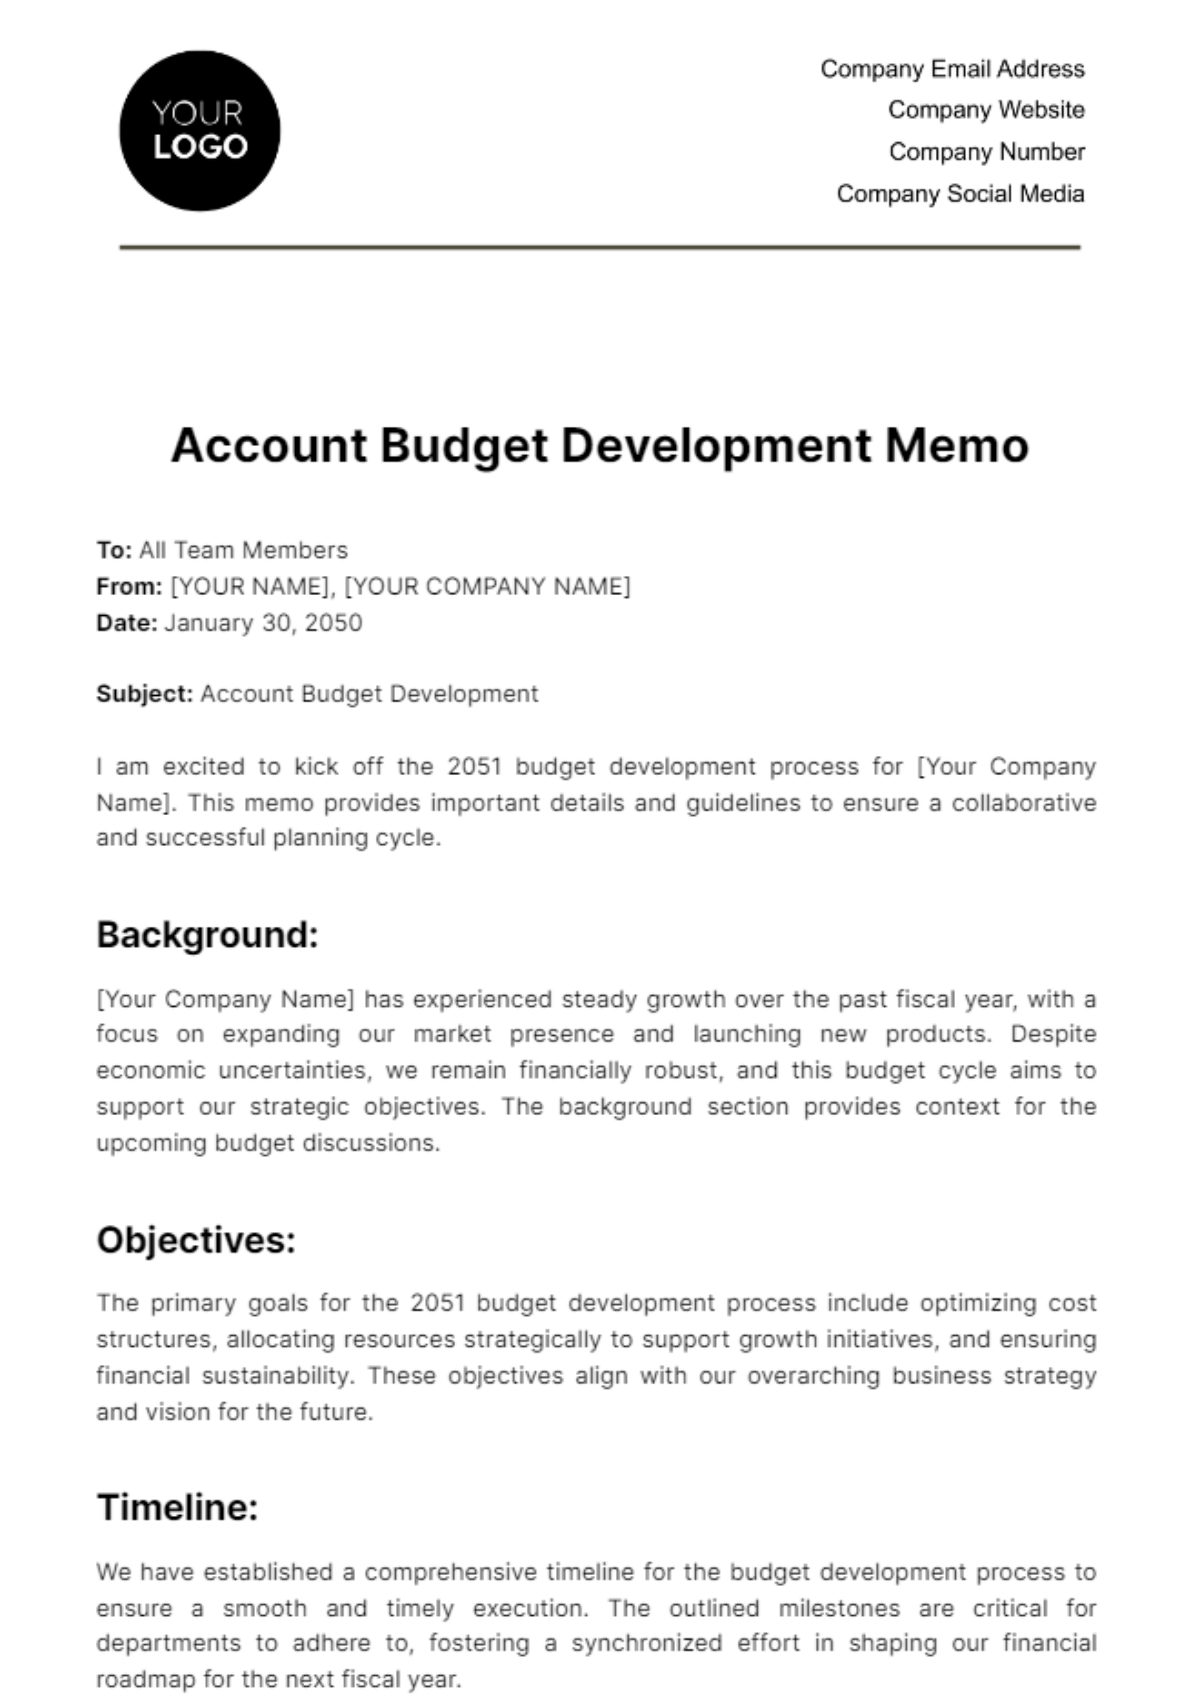 Account Budget Development Memo Template